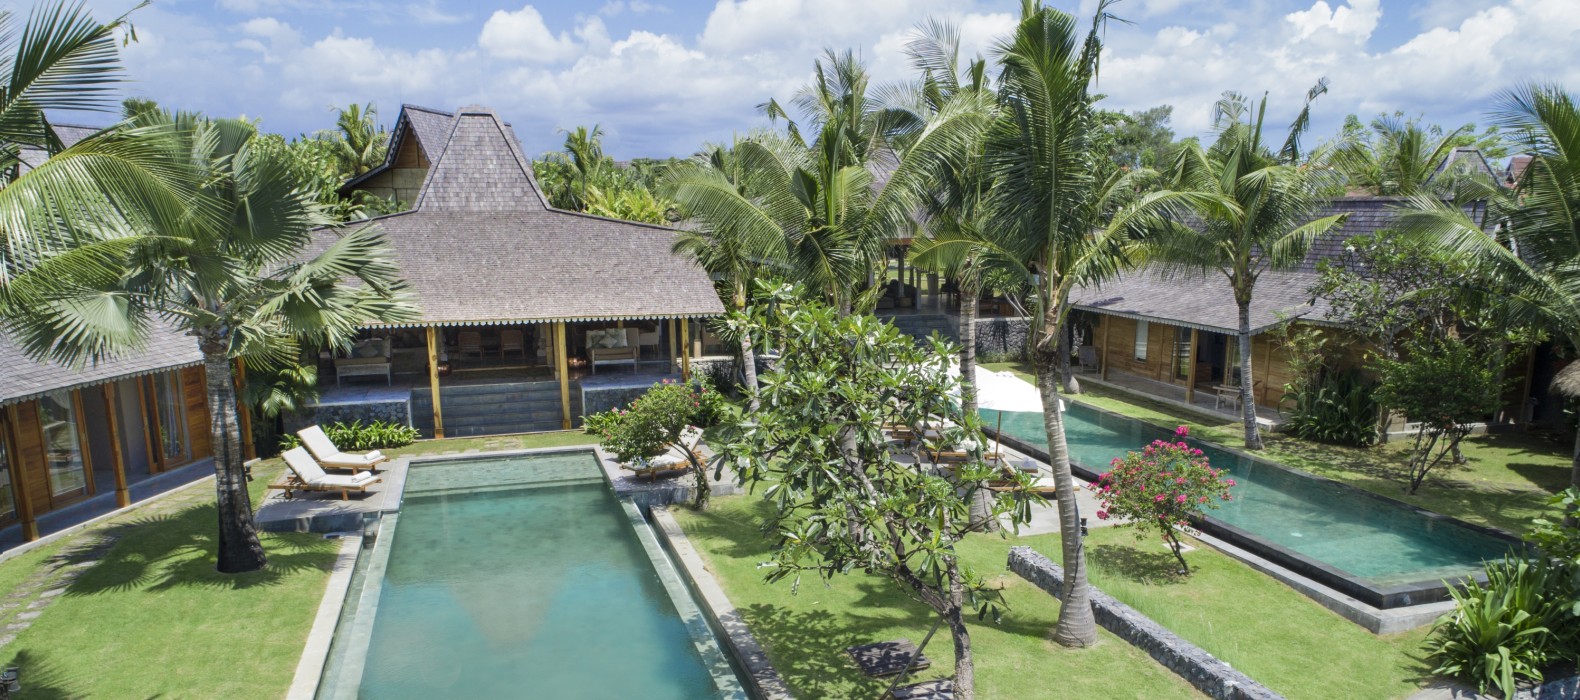 Exterior villa of Villa Manoa in Bali